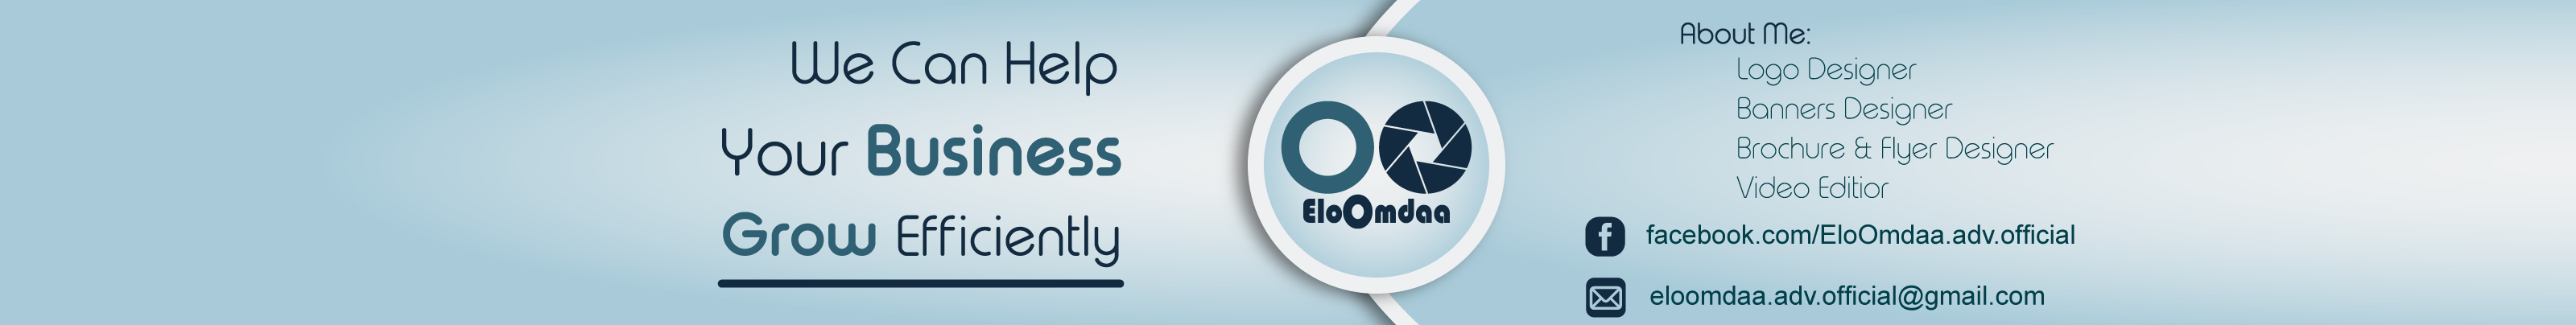 Emad Mohamed's profile banner